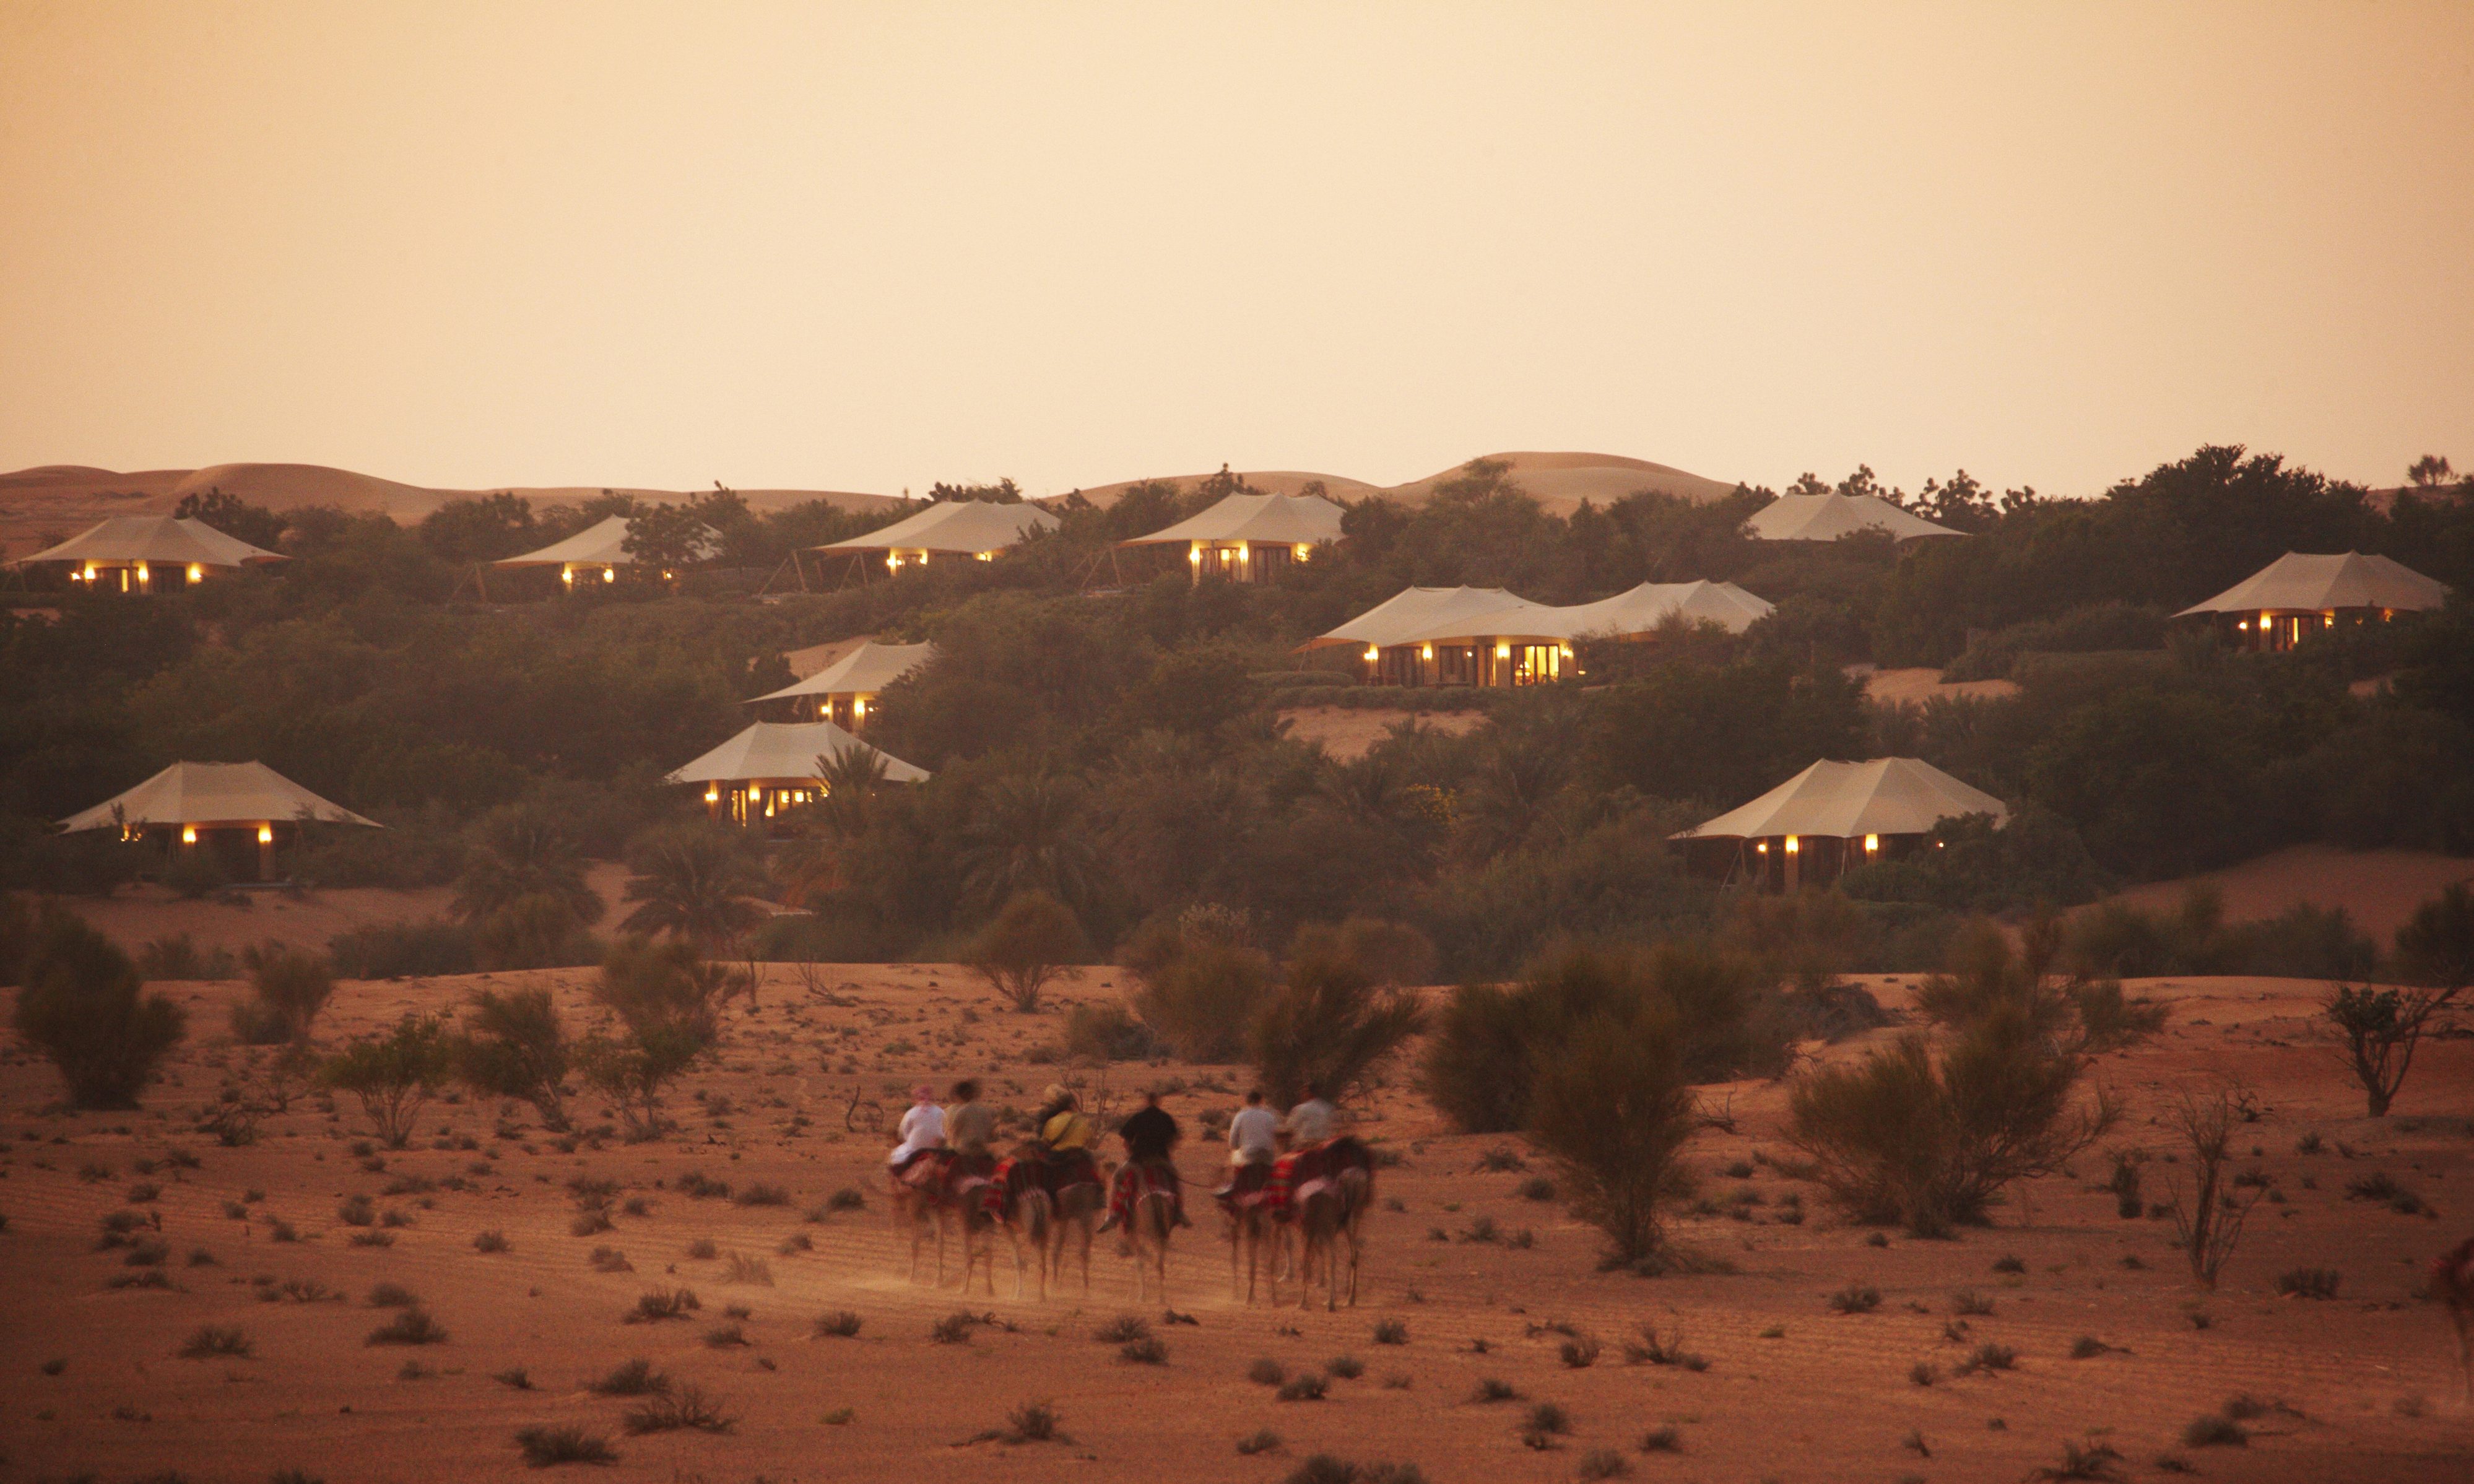 Al Maha Desert Resort Dubai